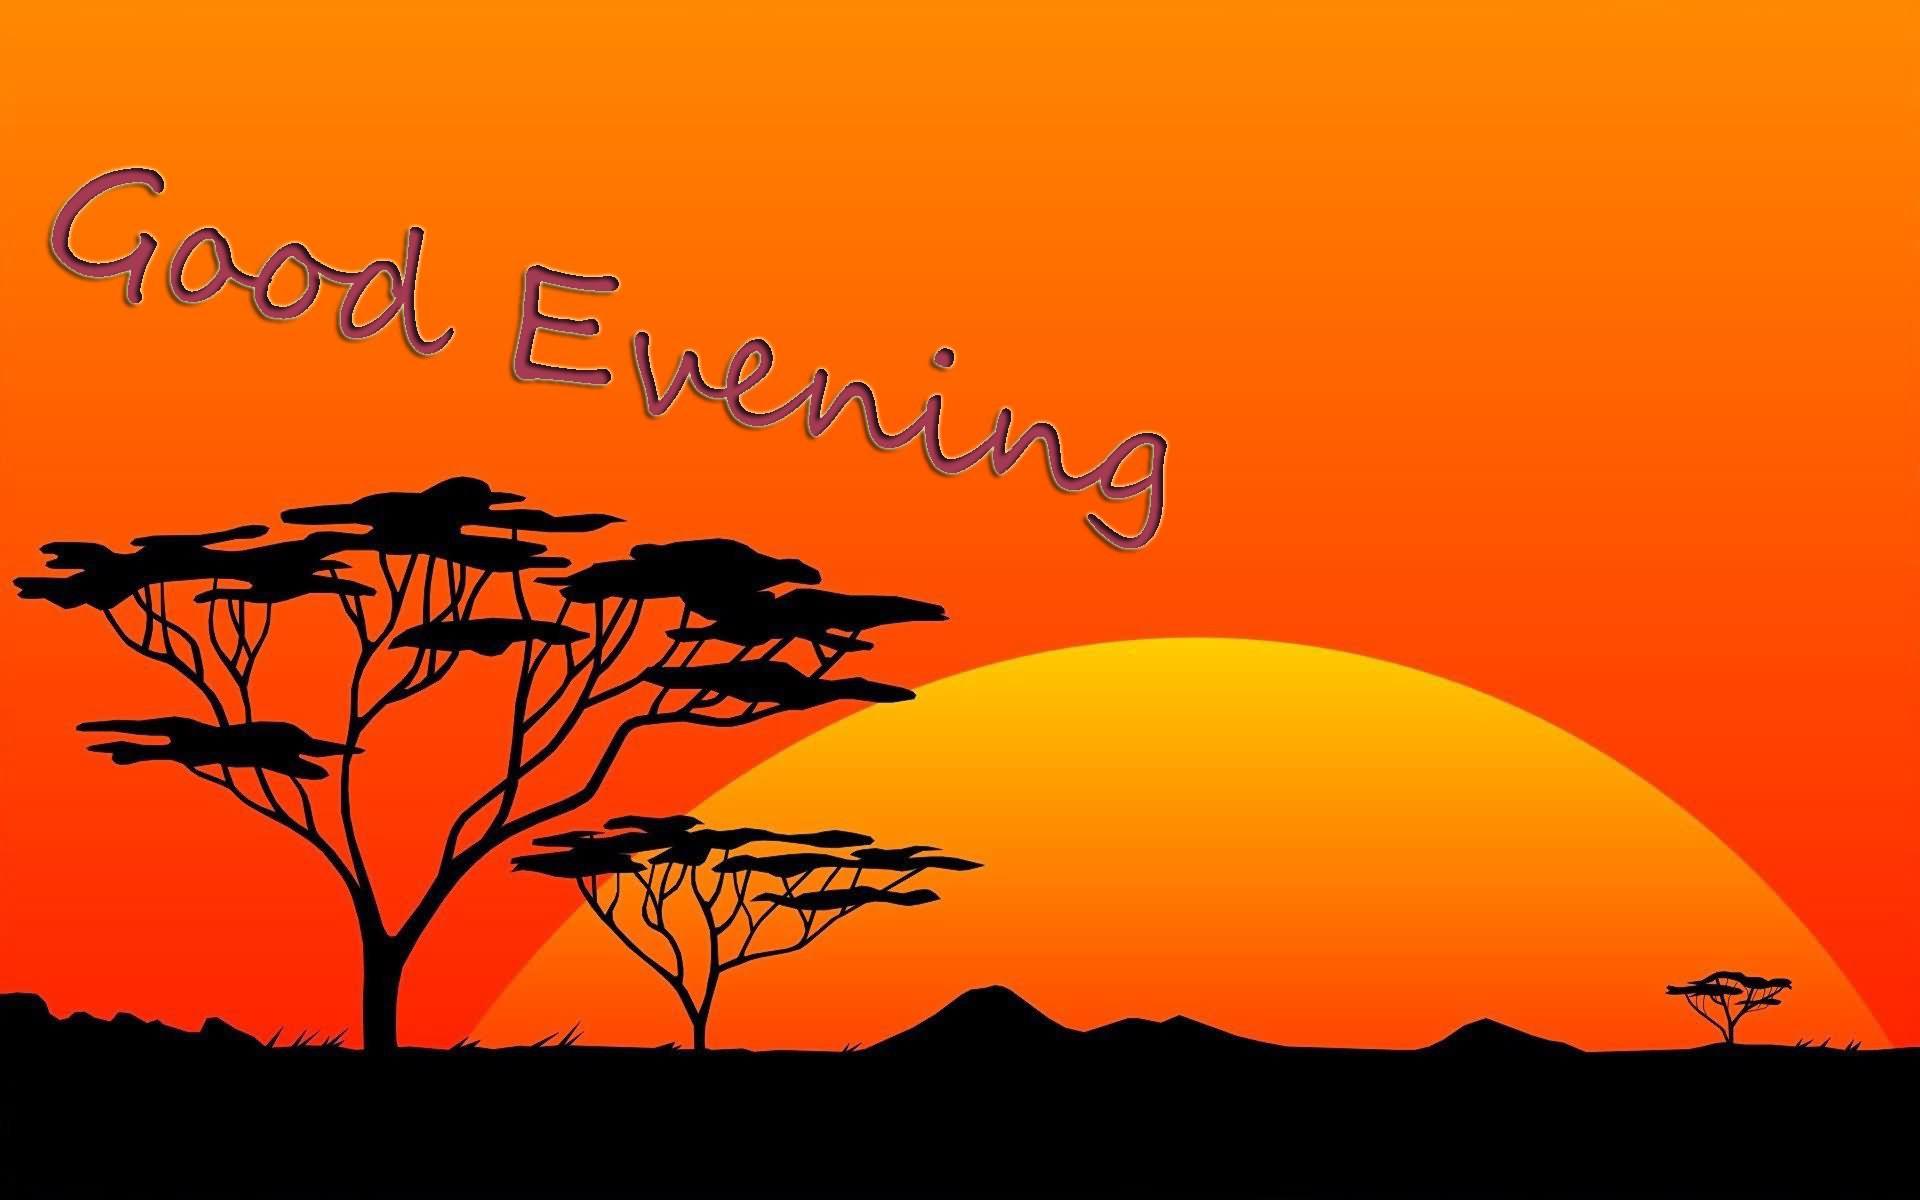 Free HD Wishing Good Evening Sunset Wallpaper Download